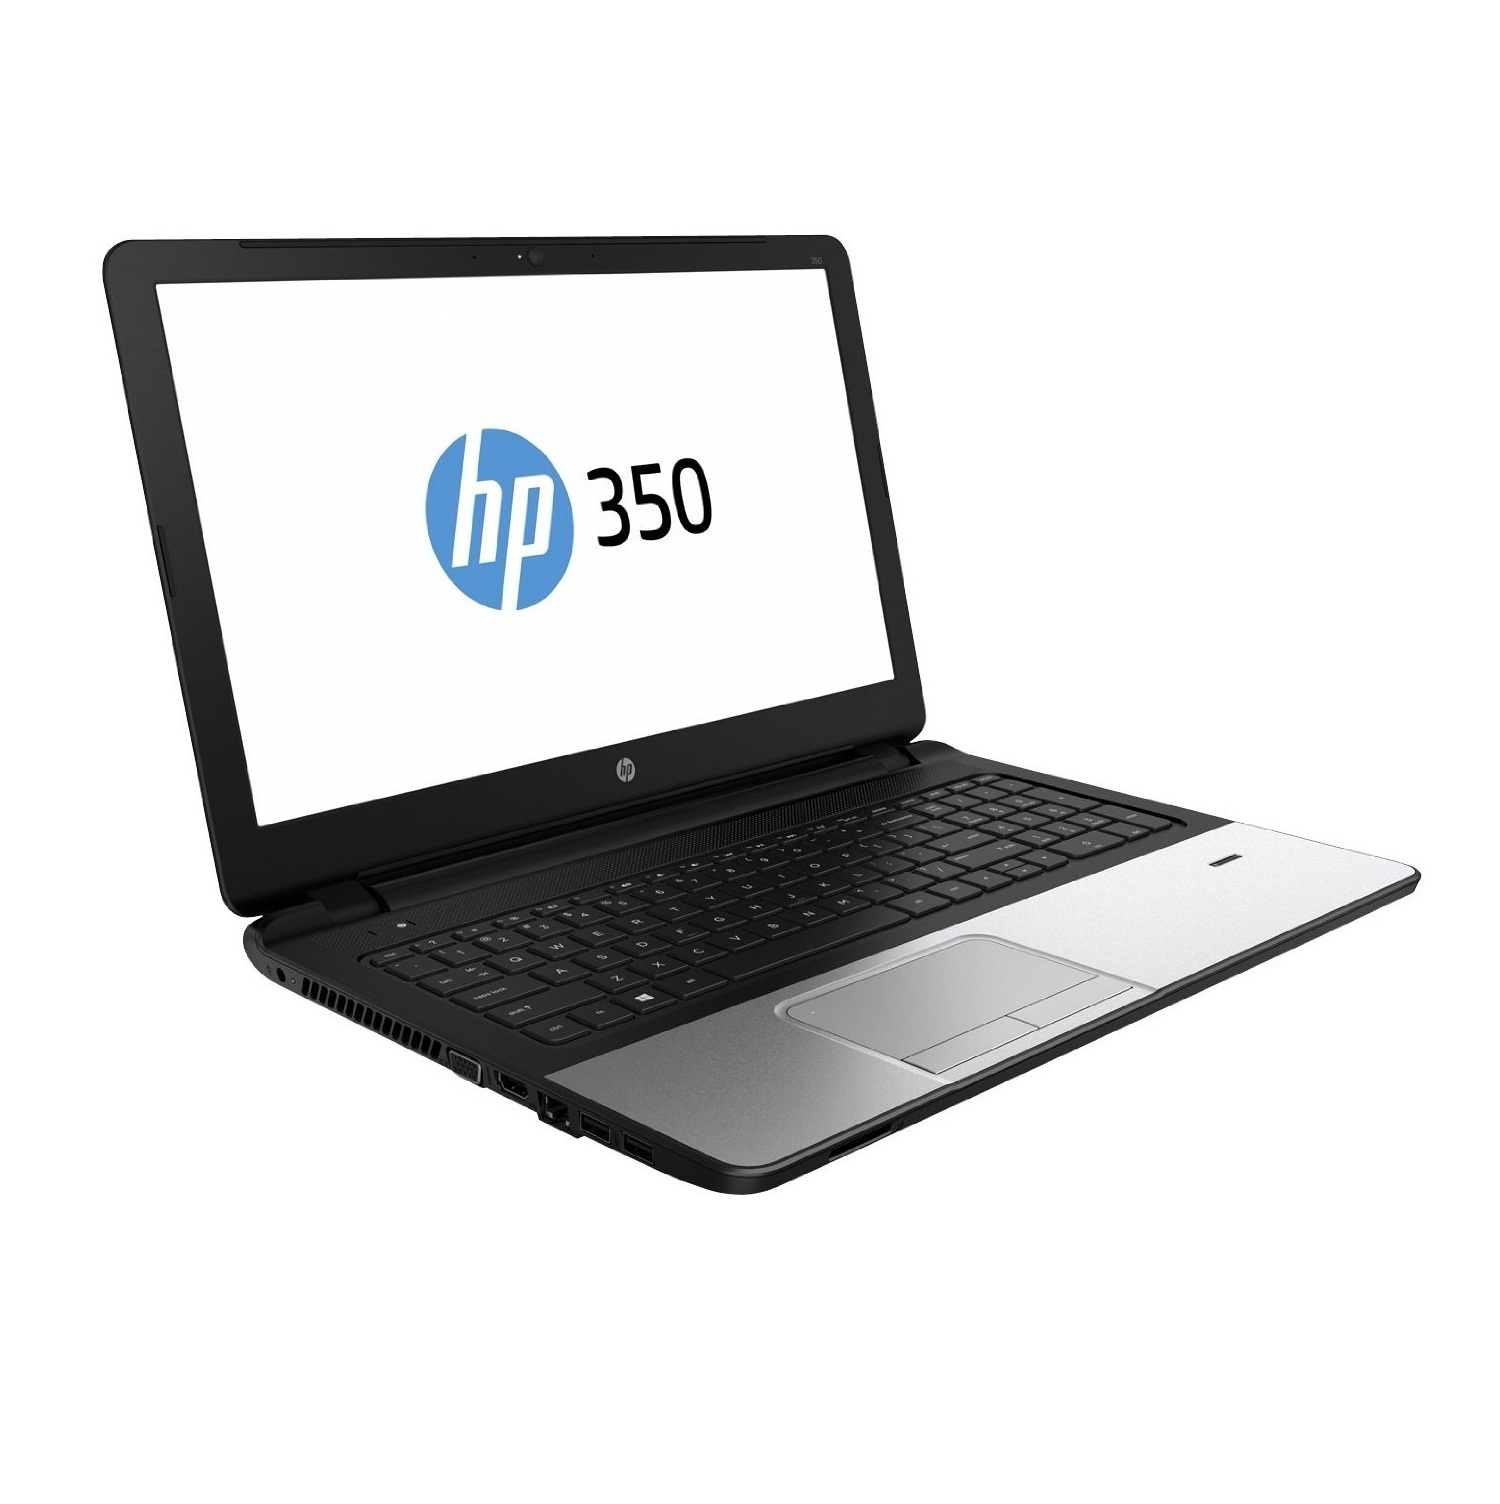 Laptop HP 350 G2 N2N04PA - Intel Core i5 5200U 2.2Ghz, 4Gb RAM, 500Gb HDD, Intel HD Graphics, 15.6Inch